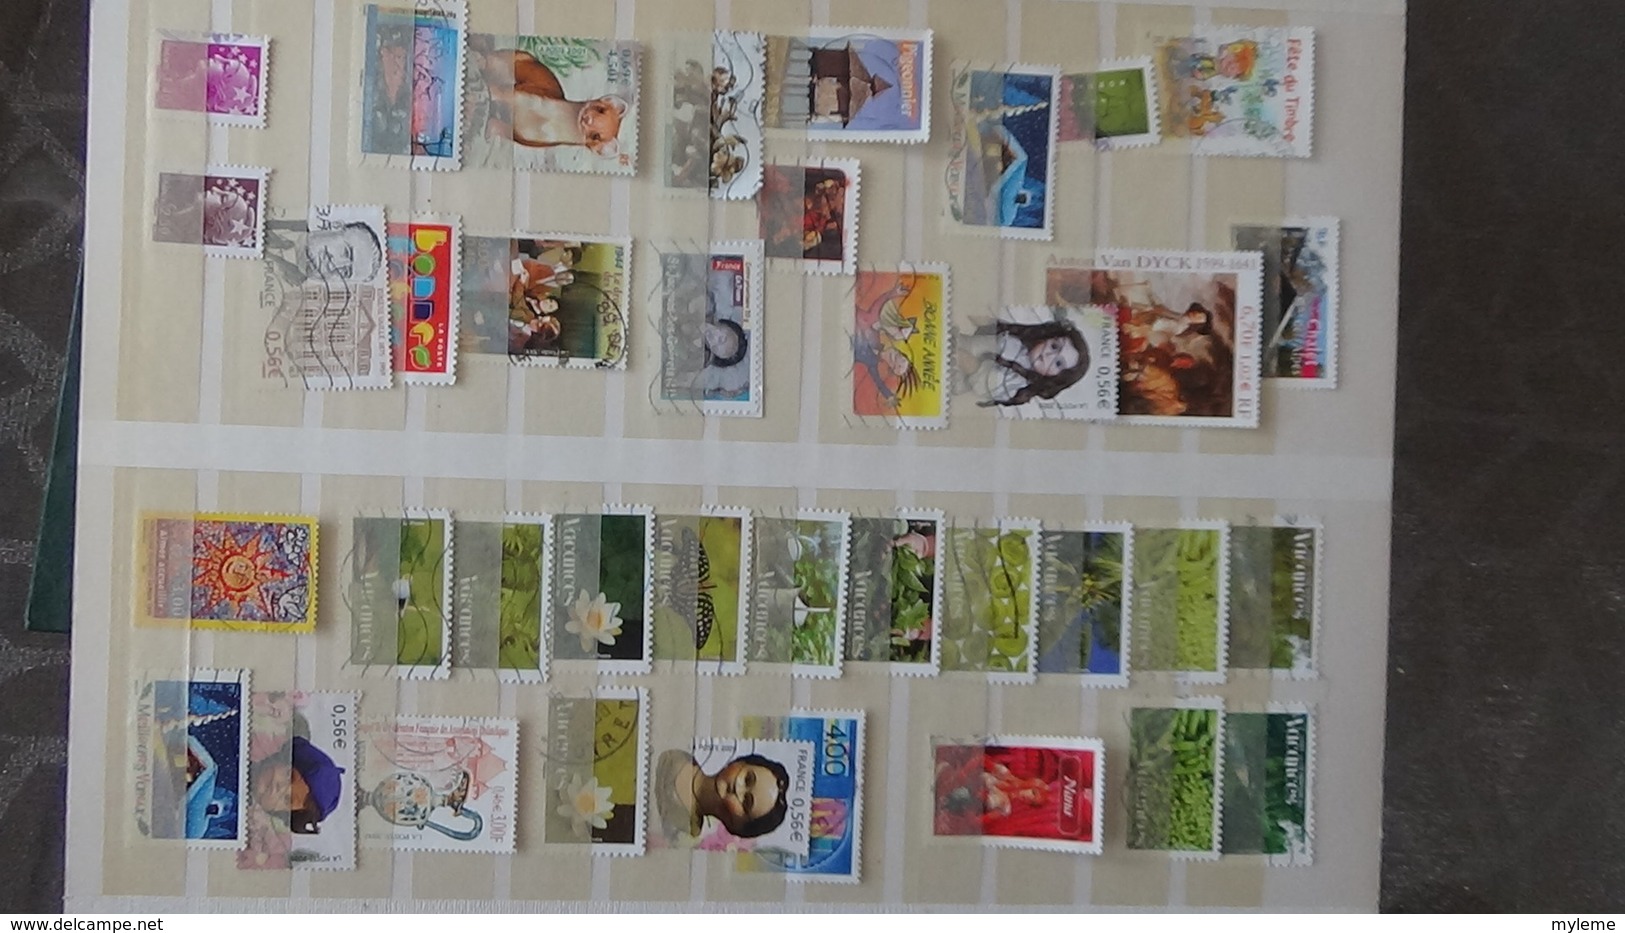 Des dizaines de timbres oblitérés (33 photos) de France en euros. A saisir !!!